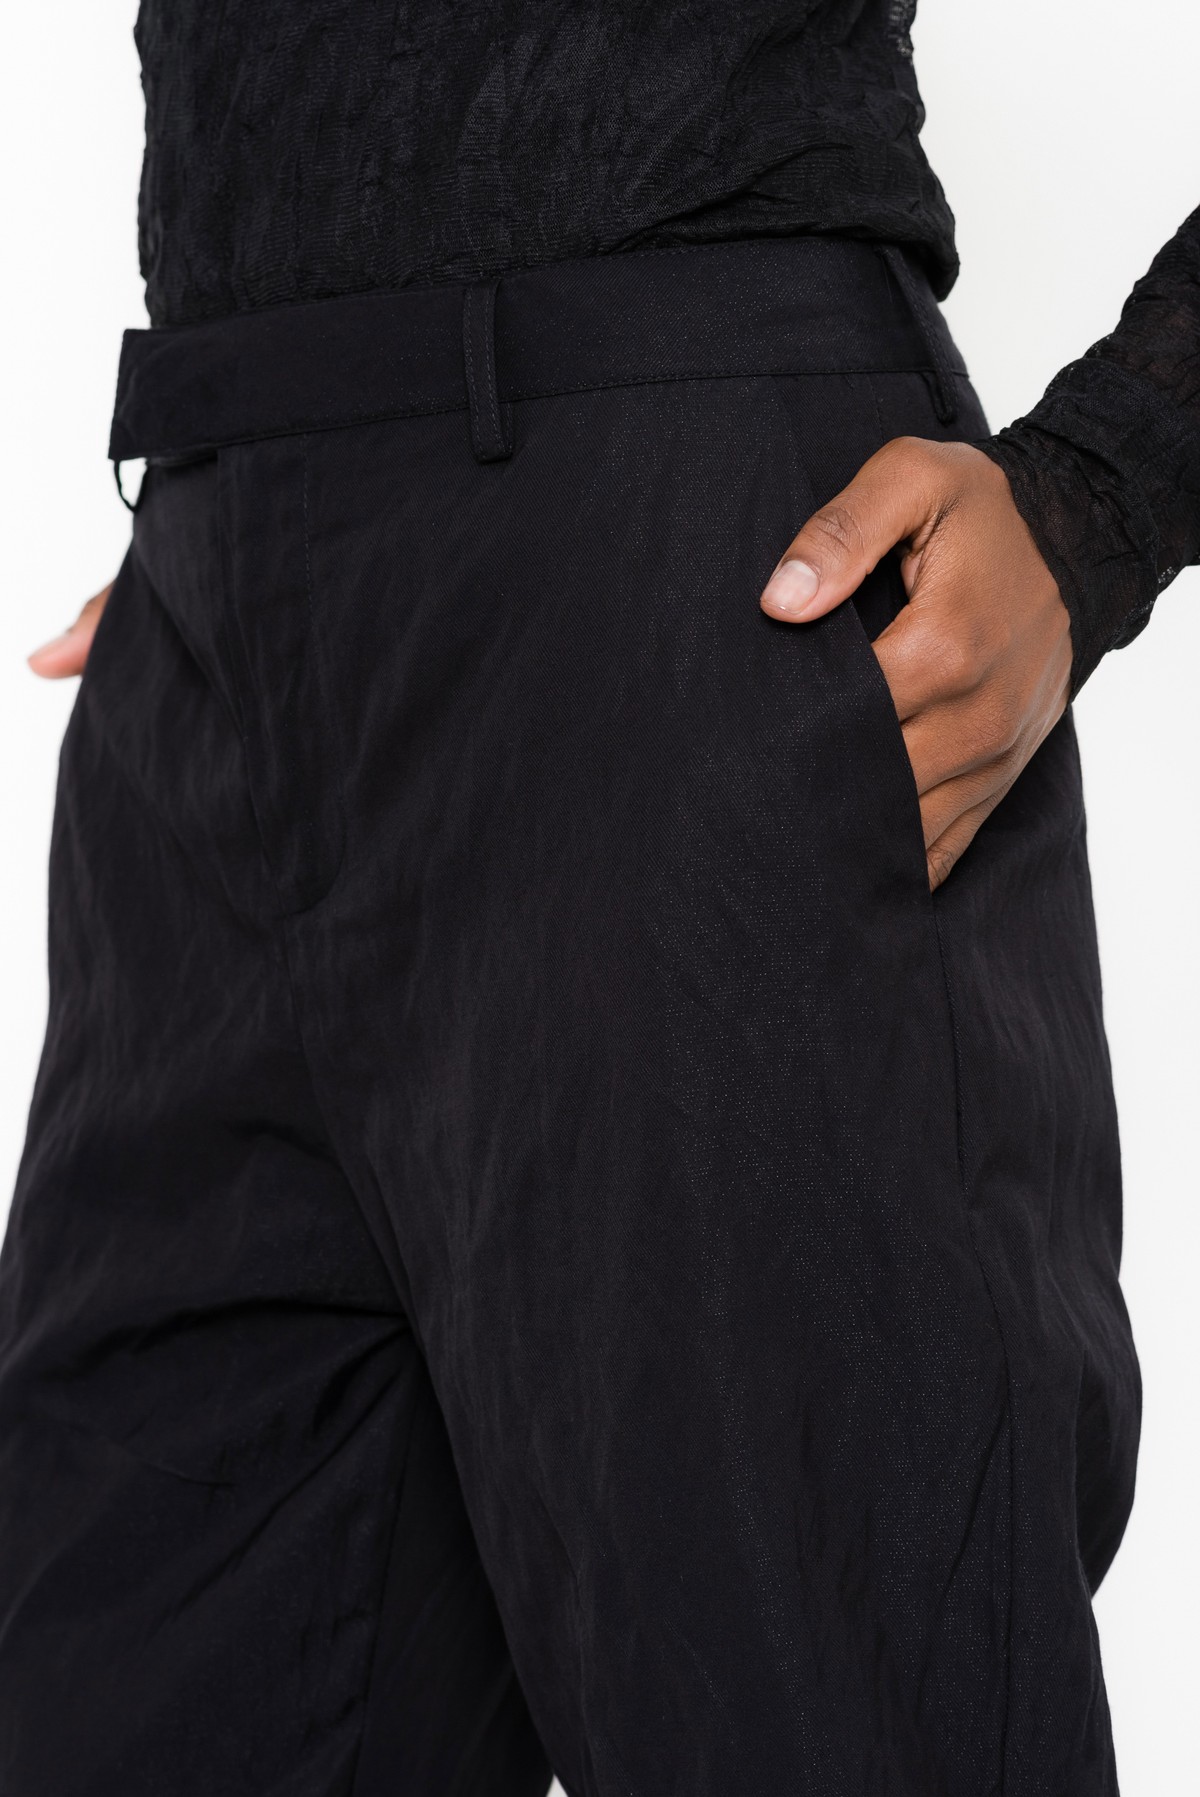 calça alfaiataria em tecido inox | crinkled inox cotton tailoring pants